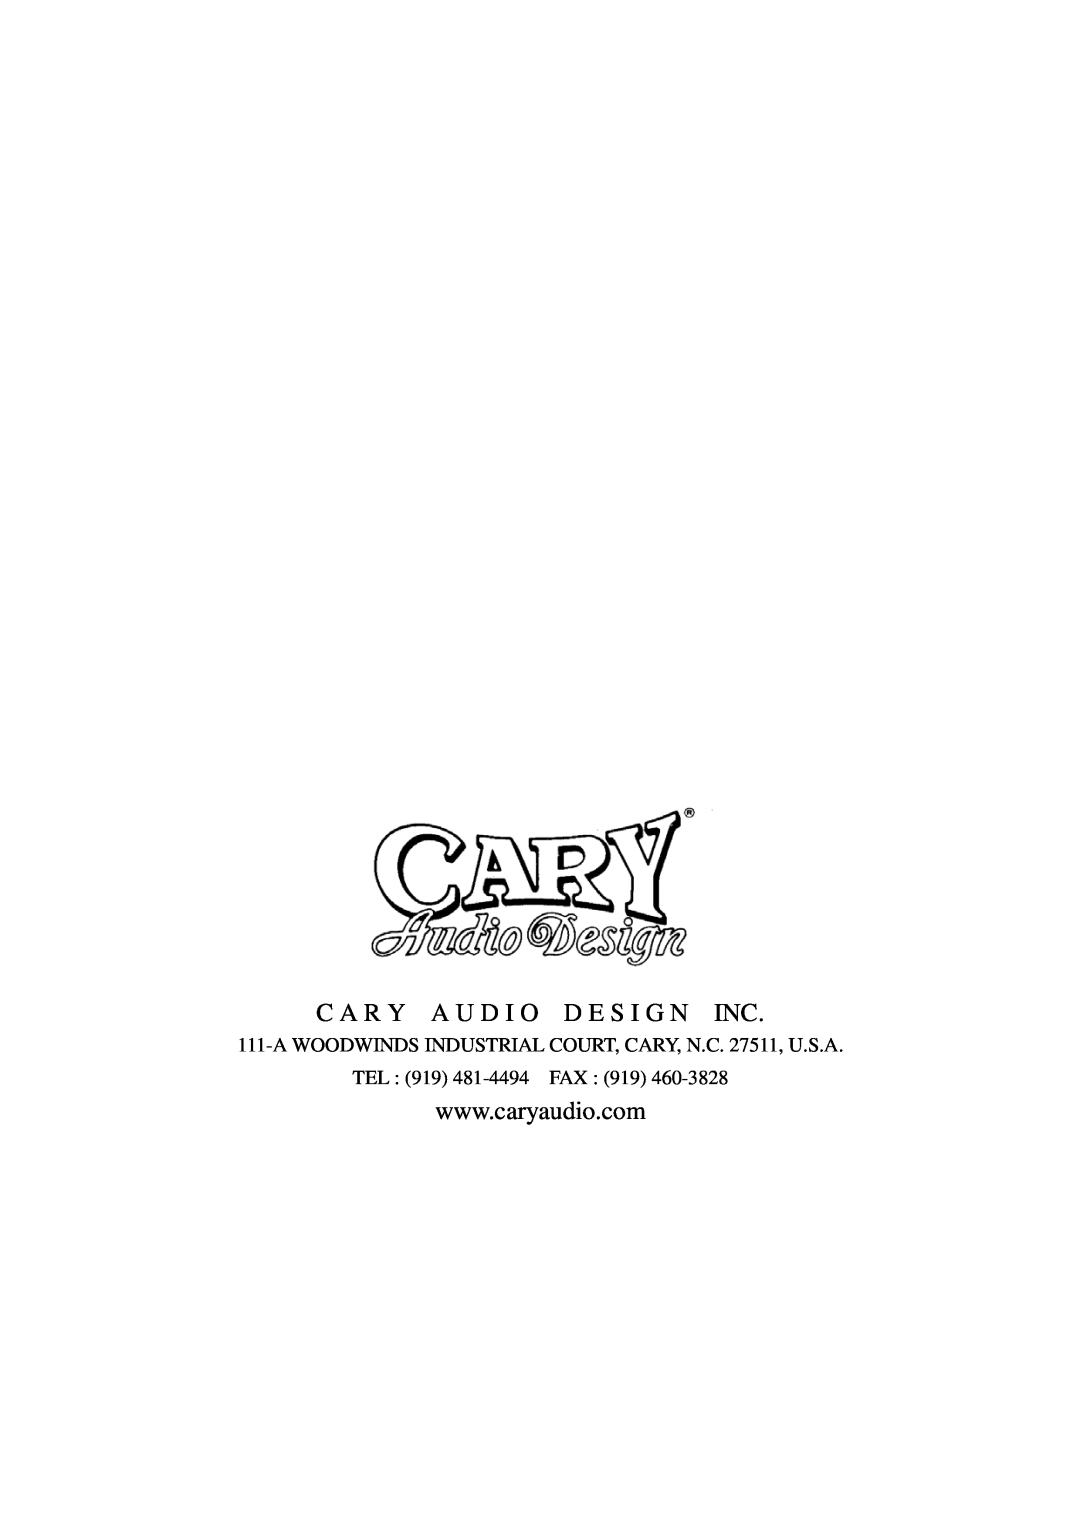 Cary Audio Design CD 200, CD 306 specifications C A R Y A U D I O D E S I G N Inc, TEL 919 481-4494FAX 